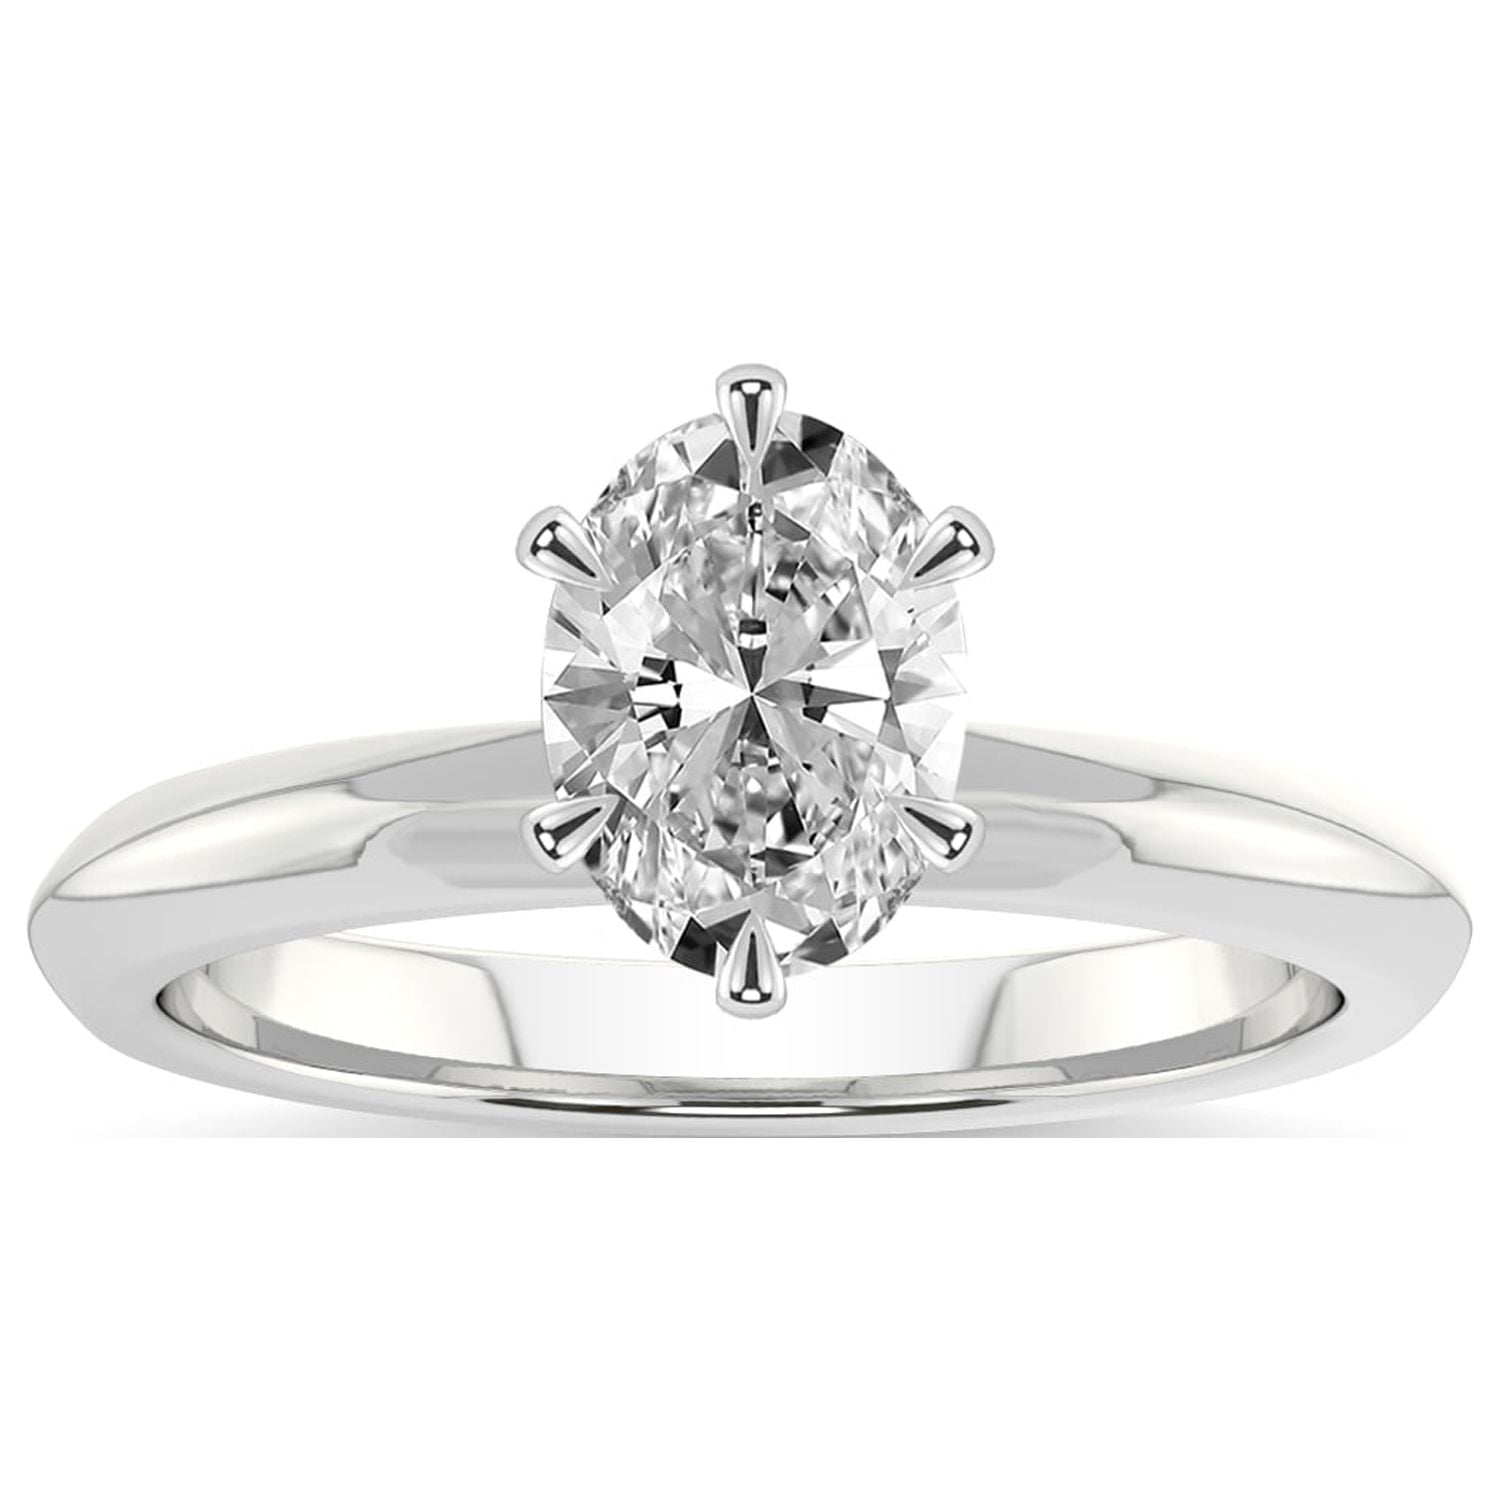 Lab-Grown Diamond Jewelry & Wedding Rings Made in Singapore